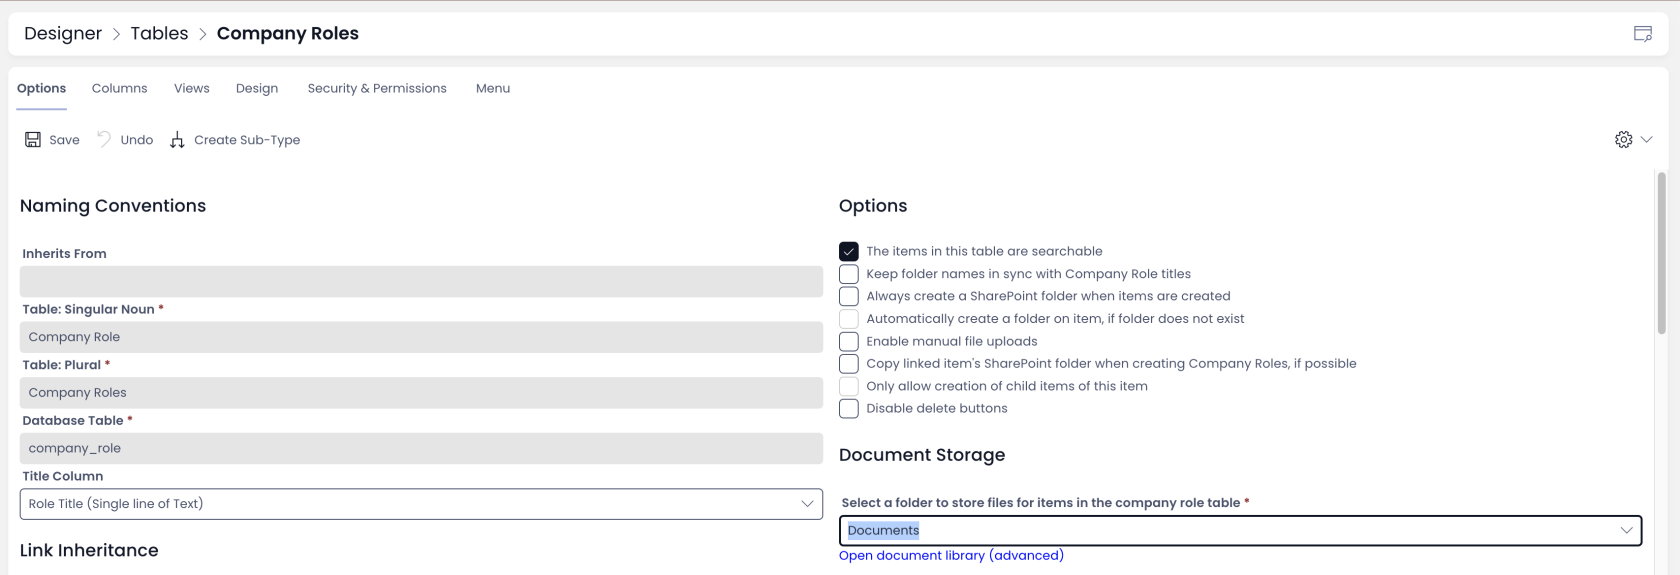 Document Storage options has not been chosen